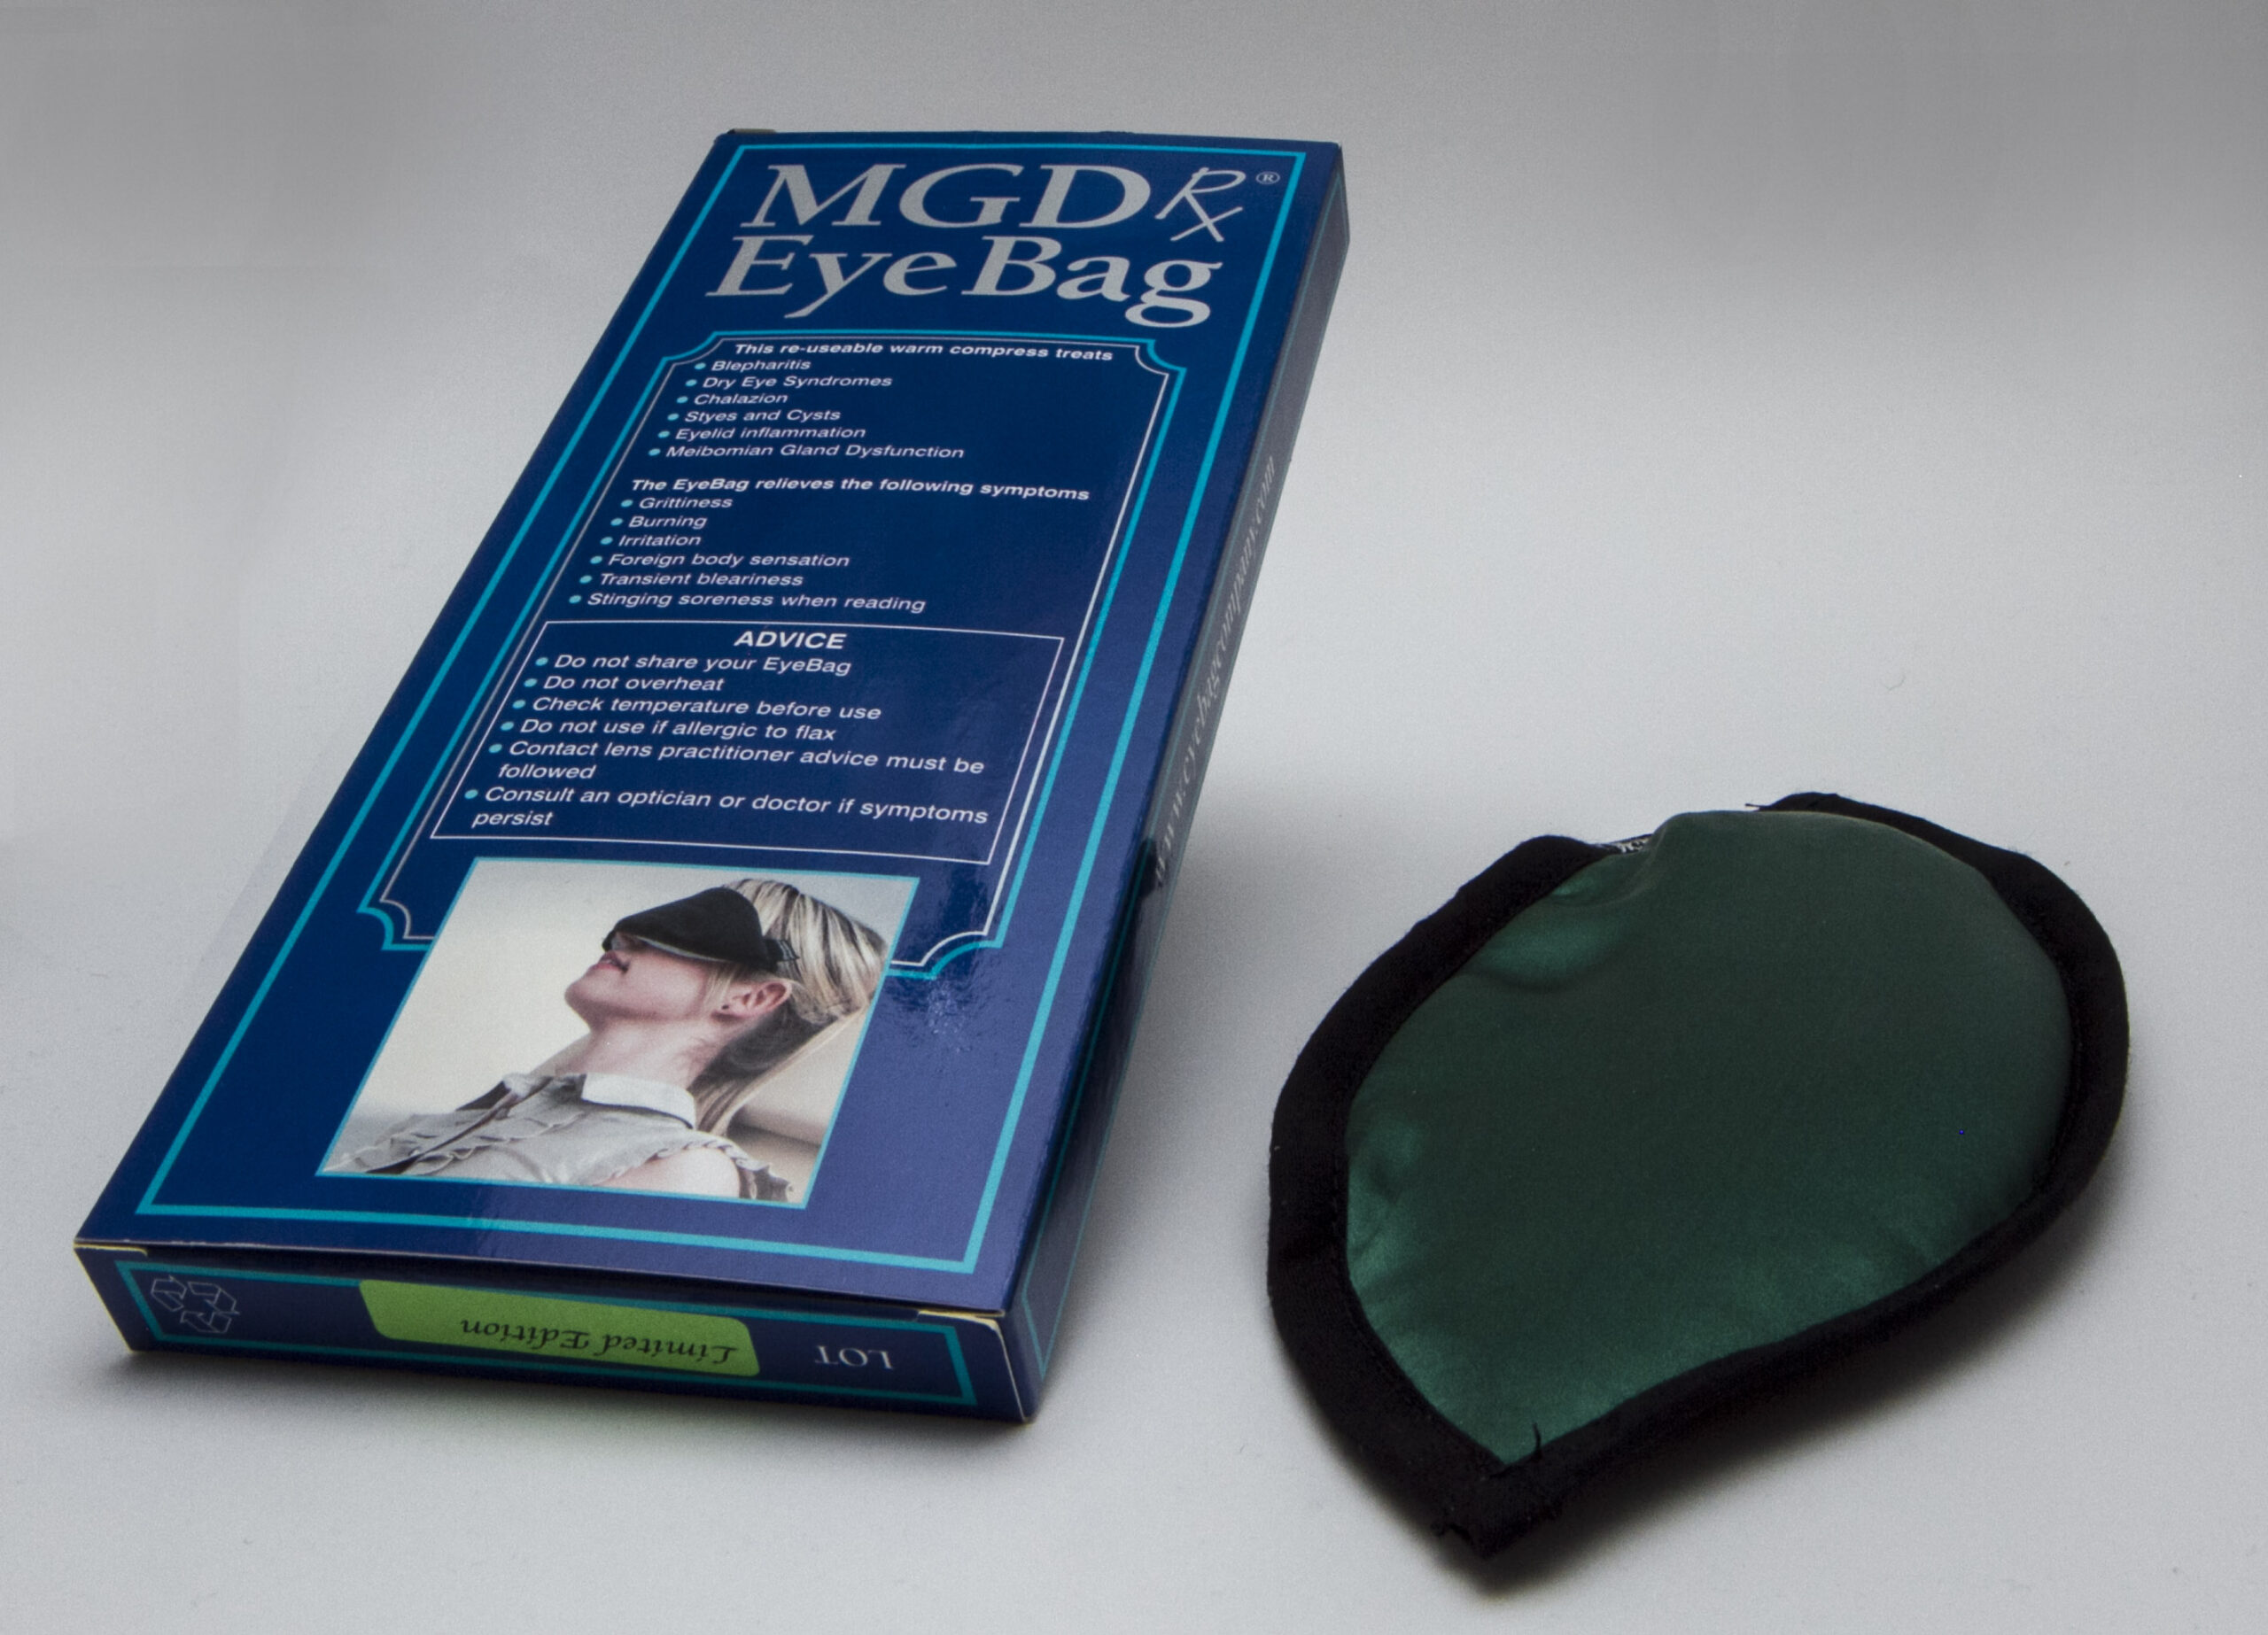 MGD Eye Bag Flax